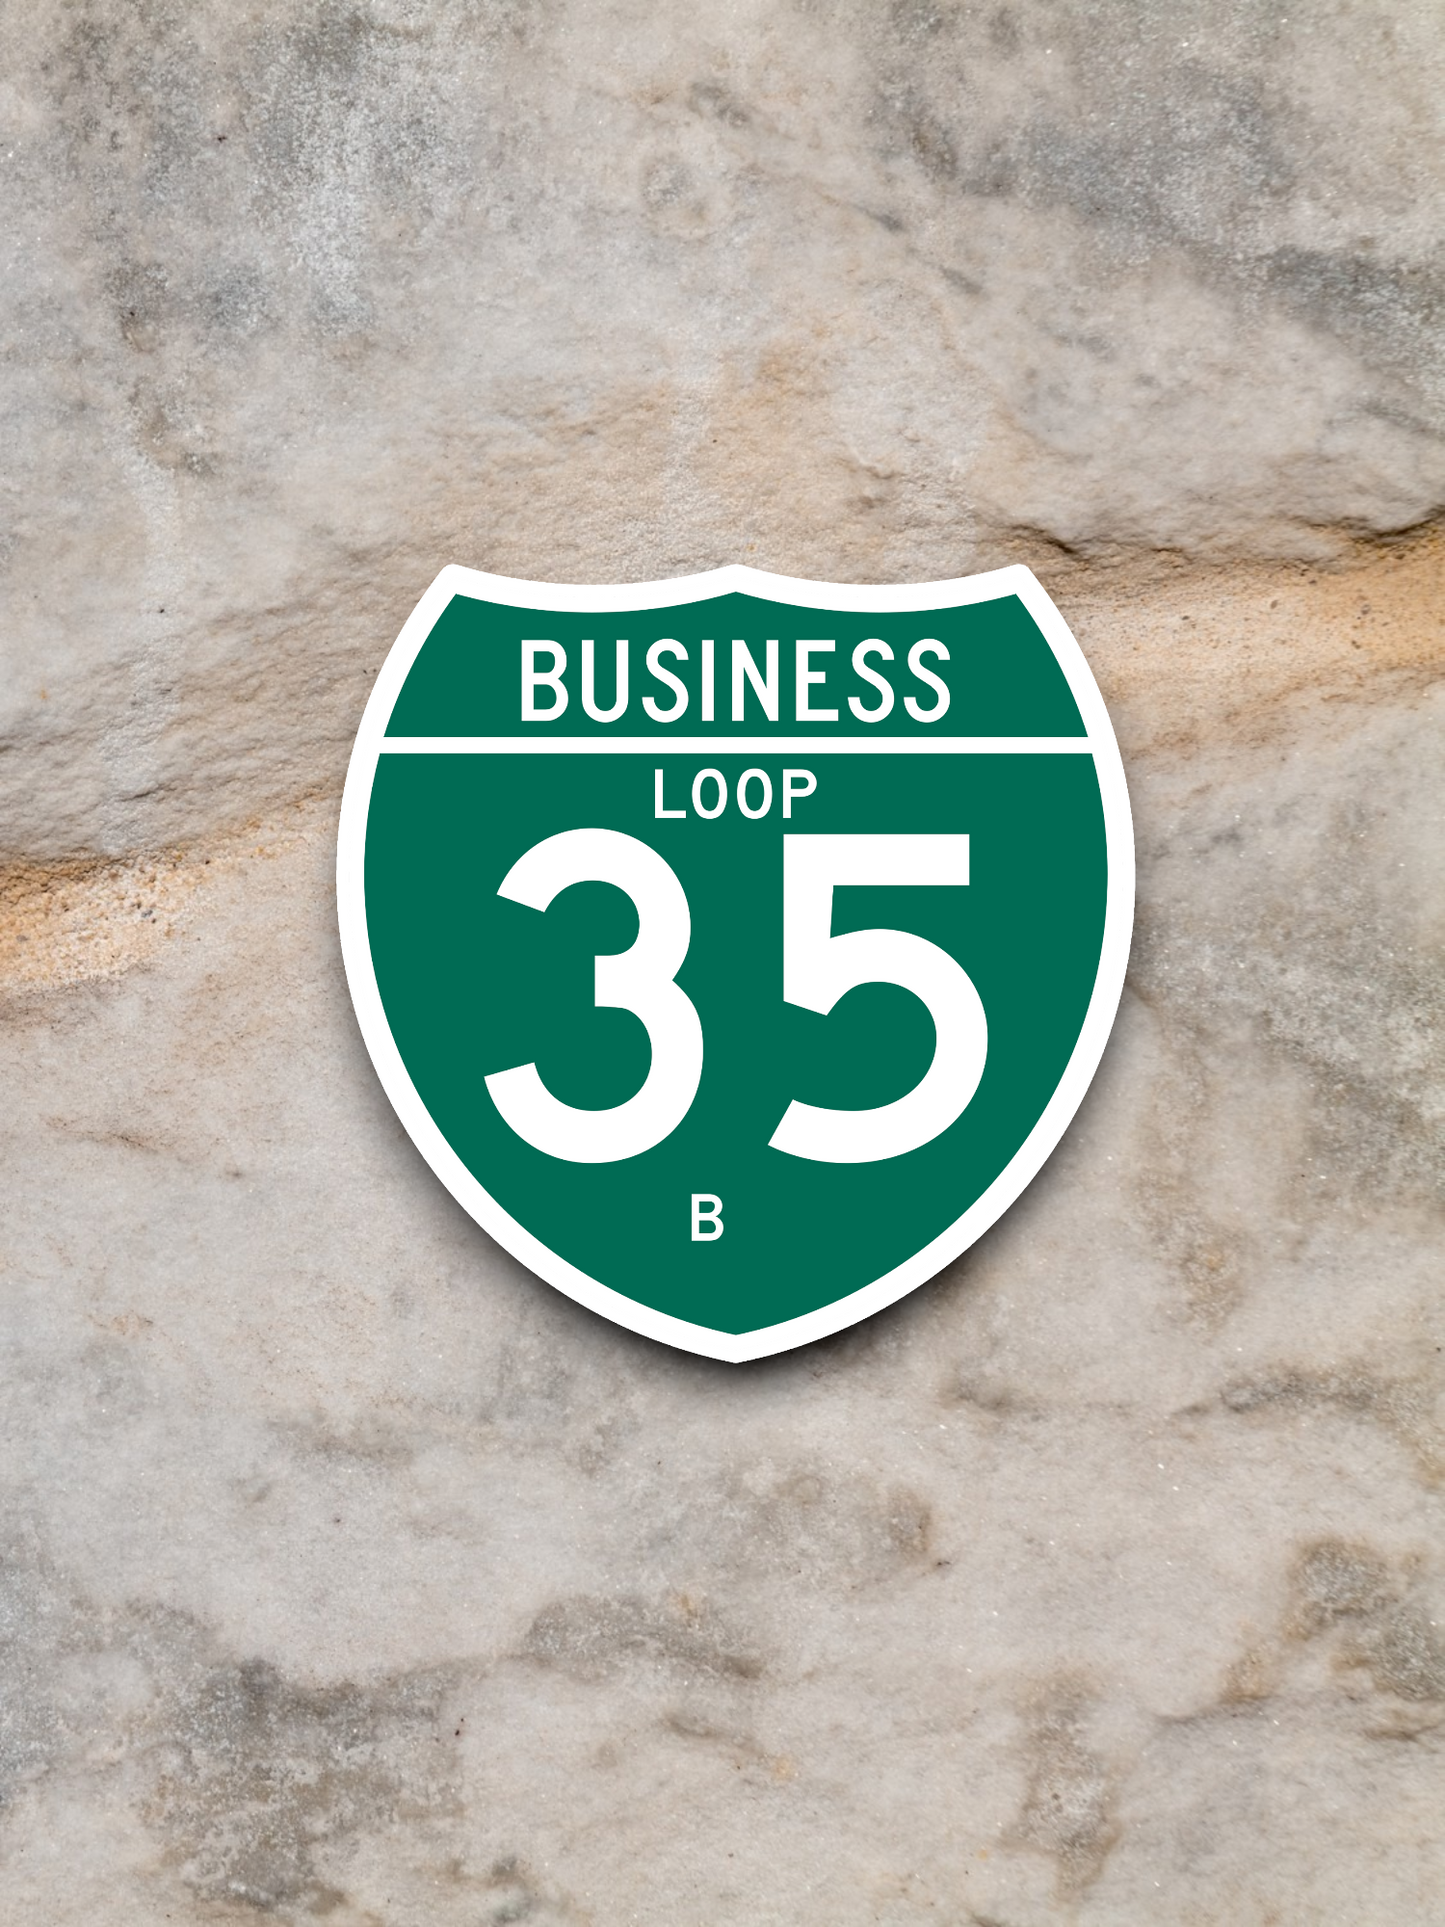 Business Spur Interstate 35-B Texas Road Sign Sticker